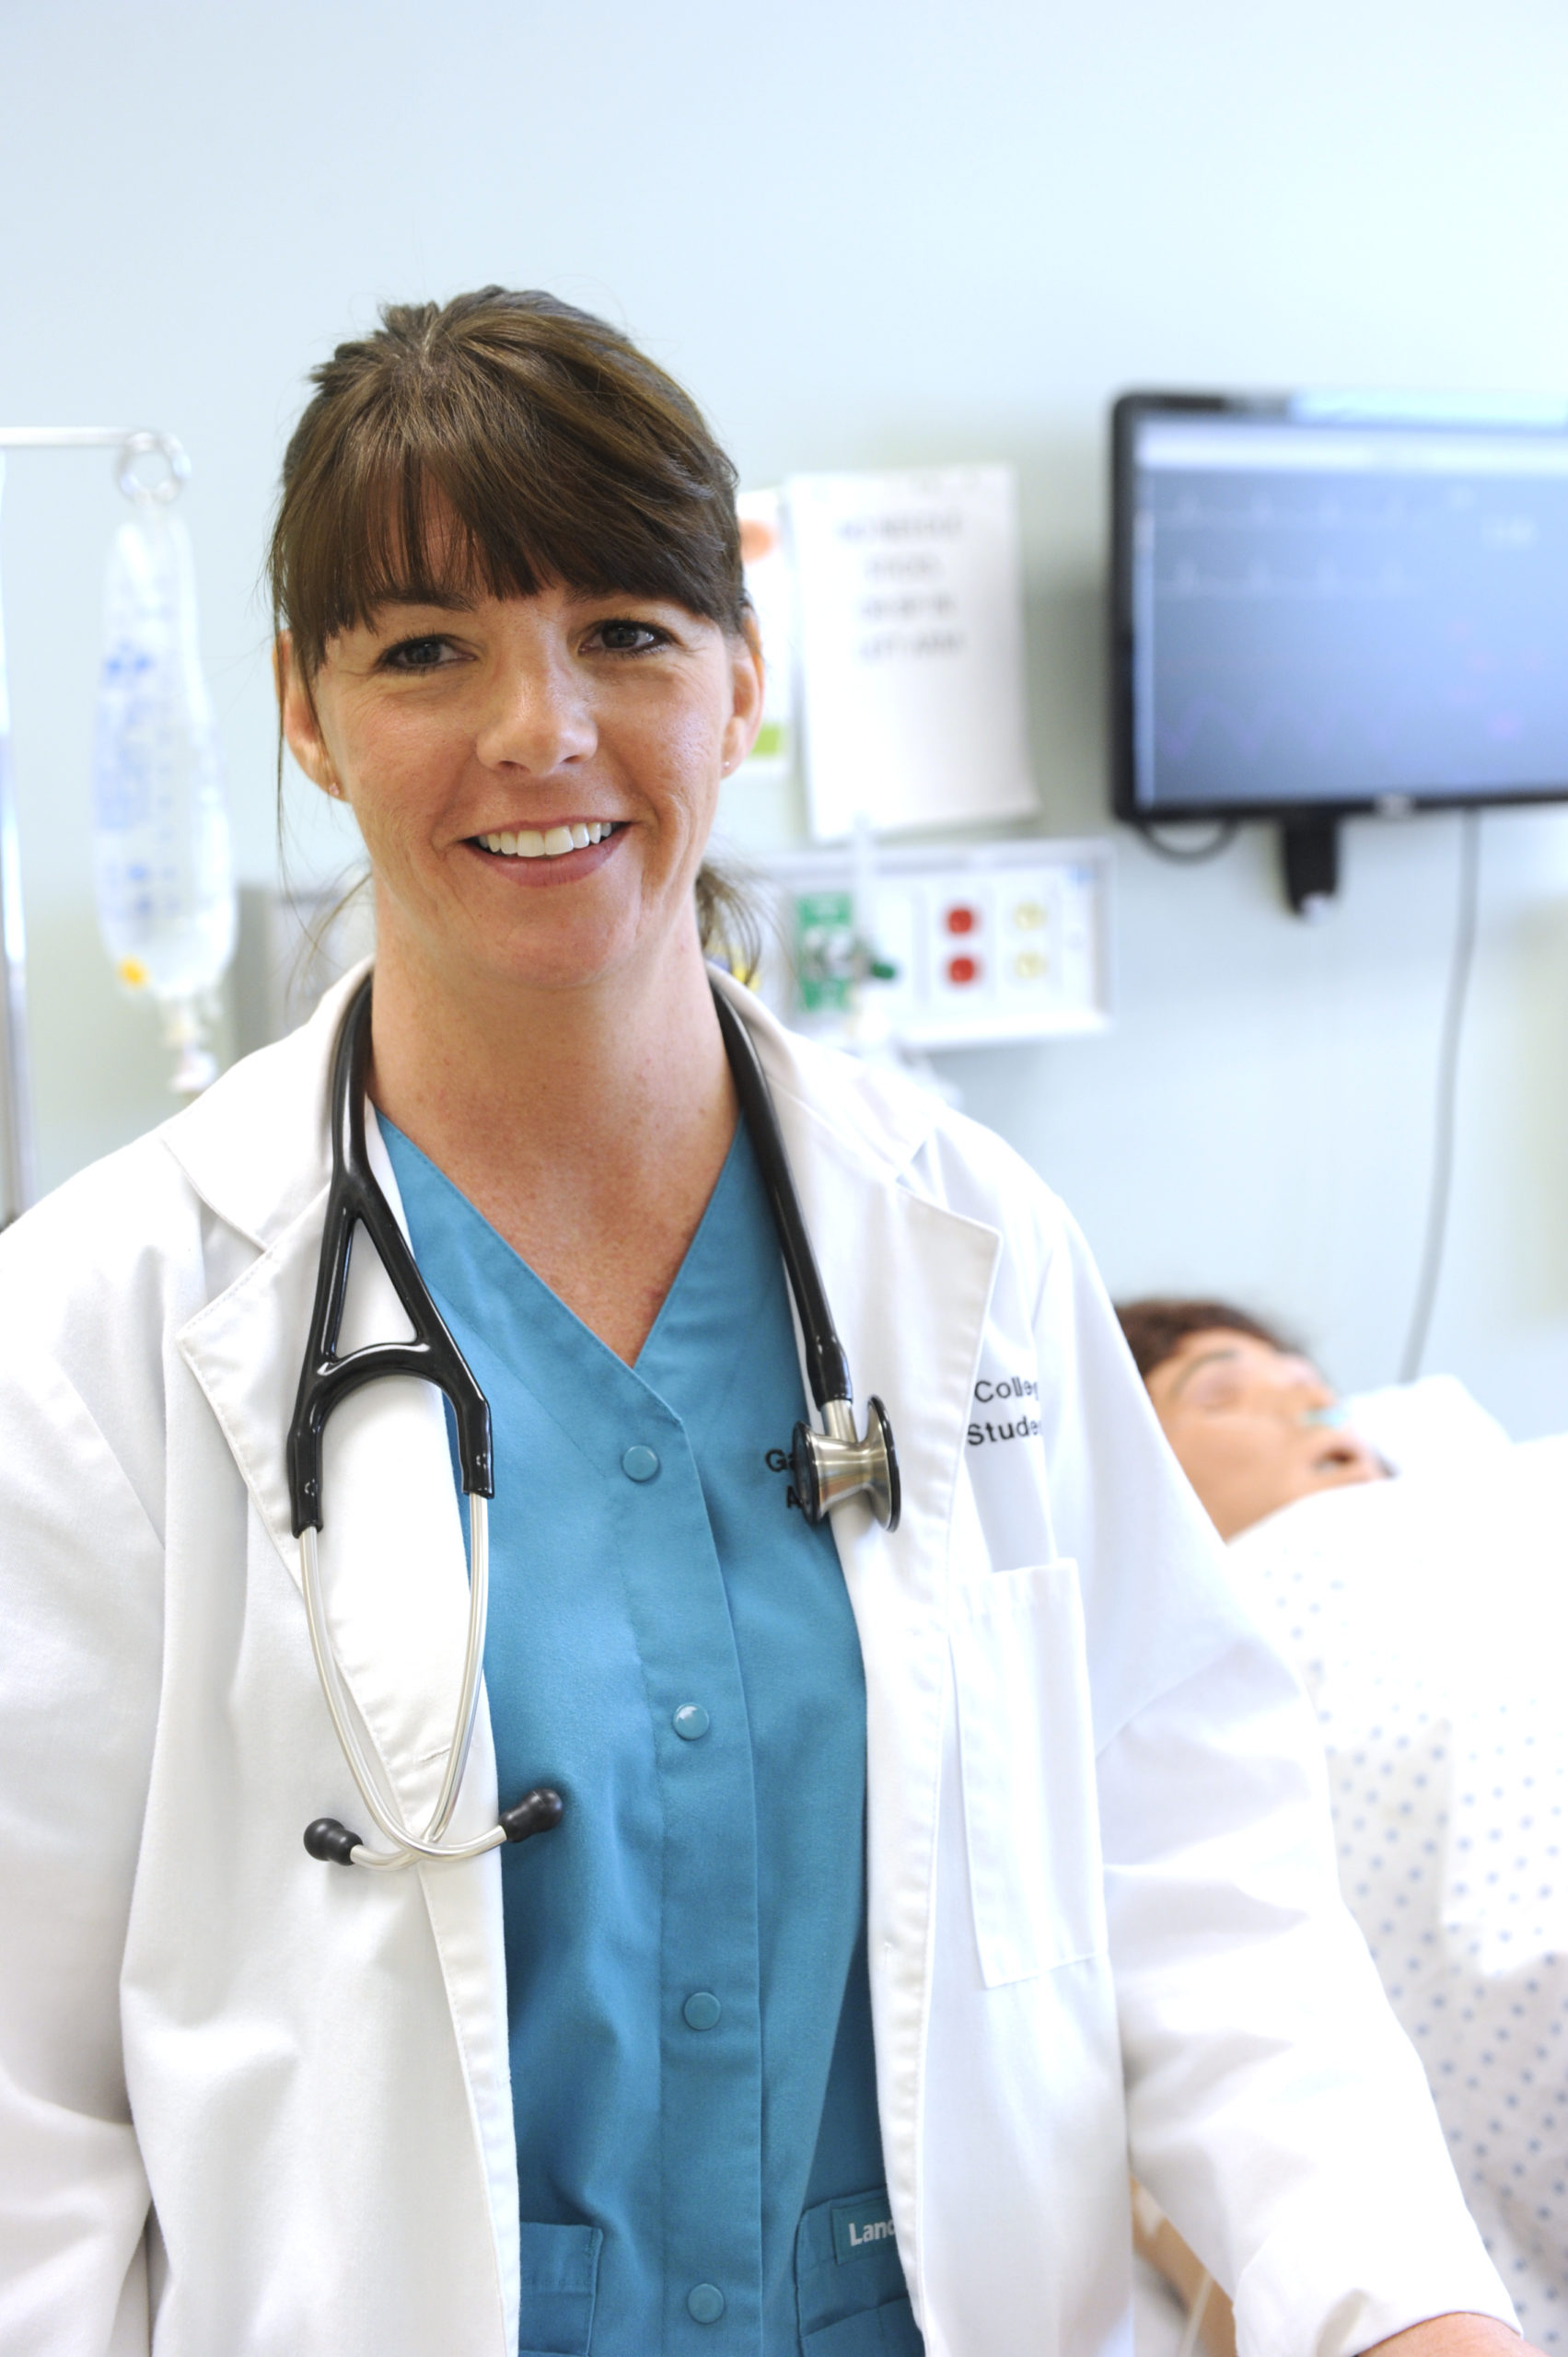 Gaston College Practical Nursing Program Ranked As One Of The Best In North Carolina - Gaston College